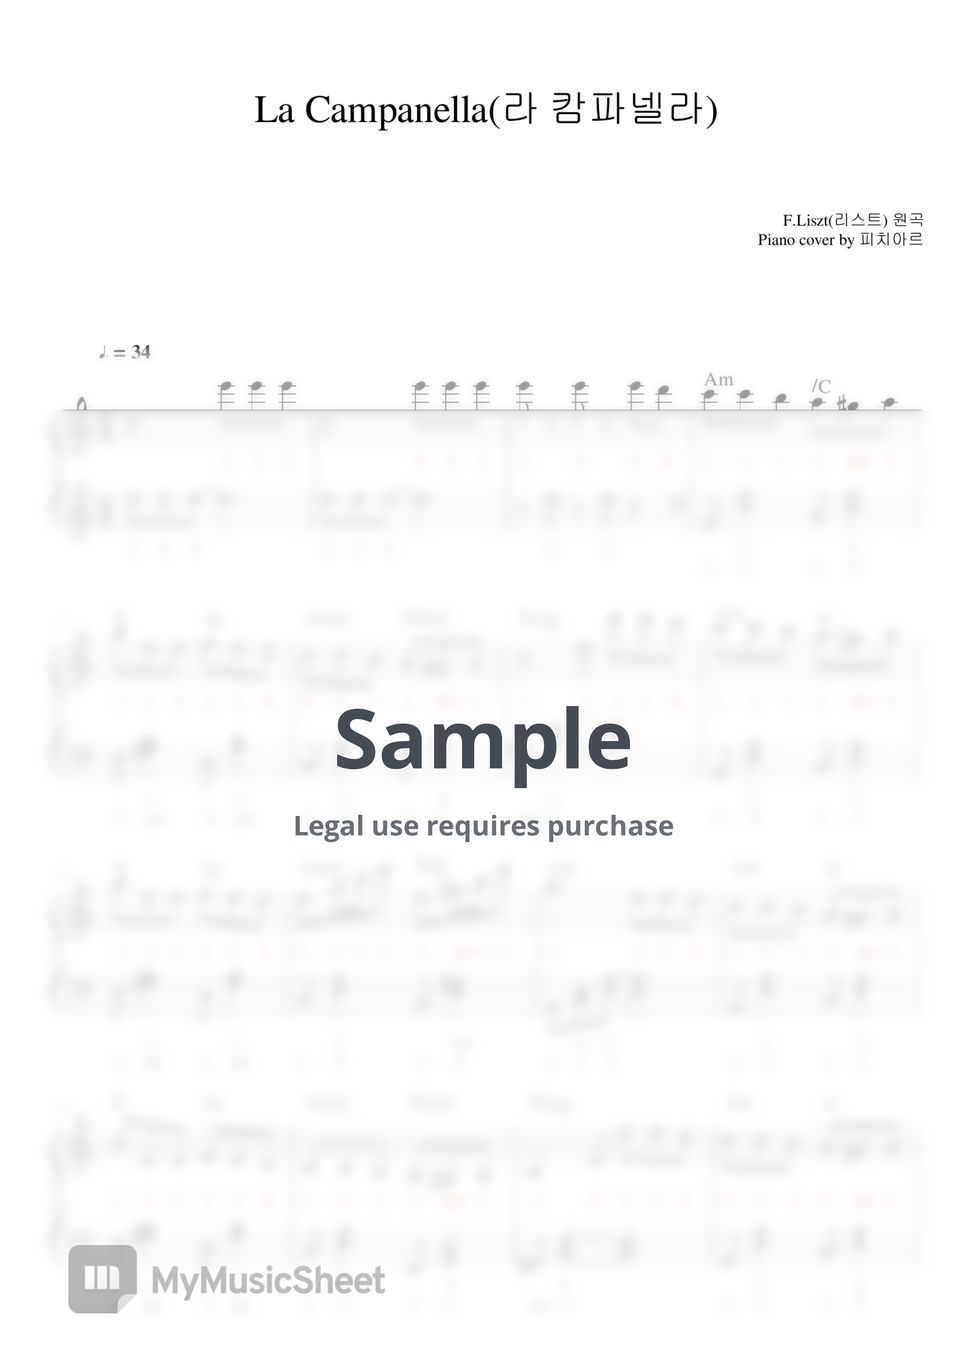 F. Liszt (리스트) - La Campanella (라 캄파넬라) (easy sheet) by Pichi Ahr(피치아르)